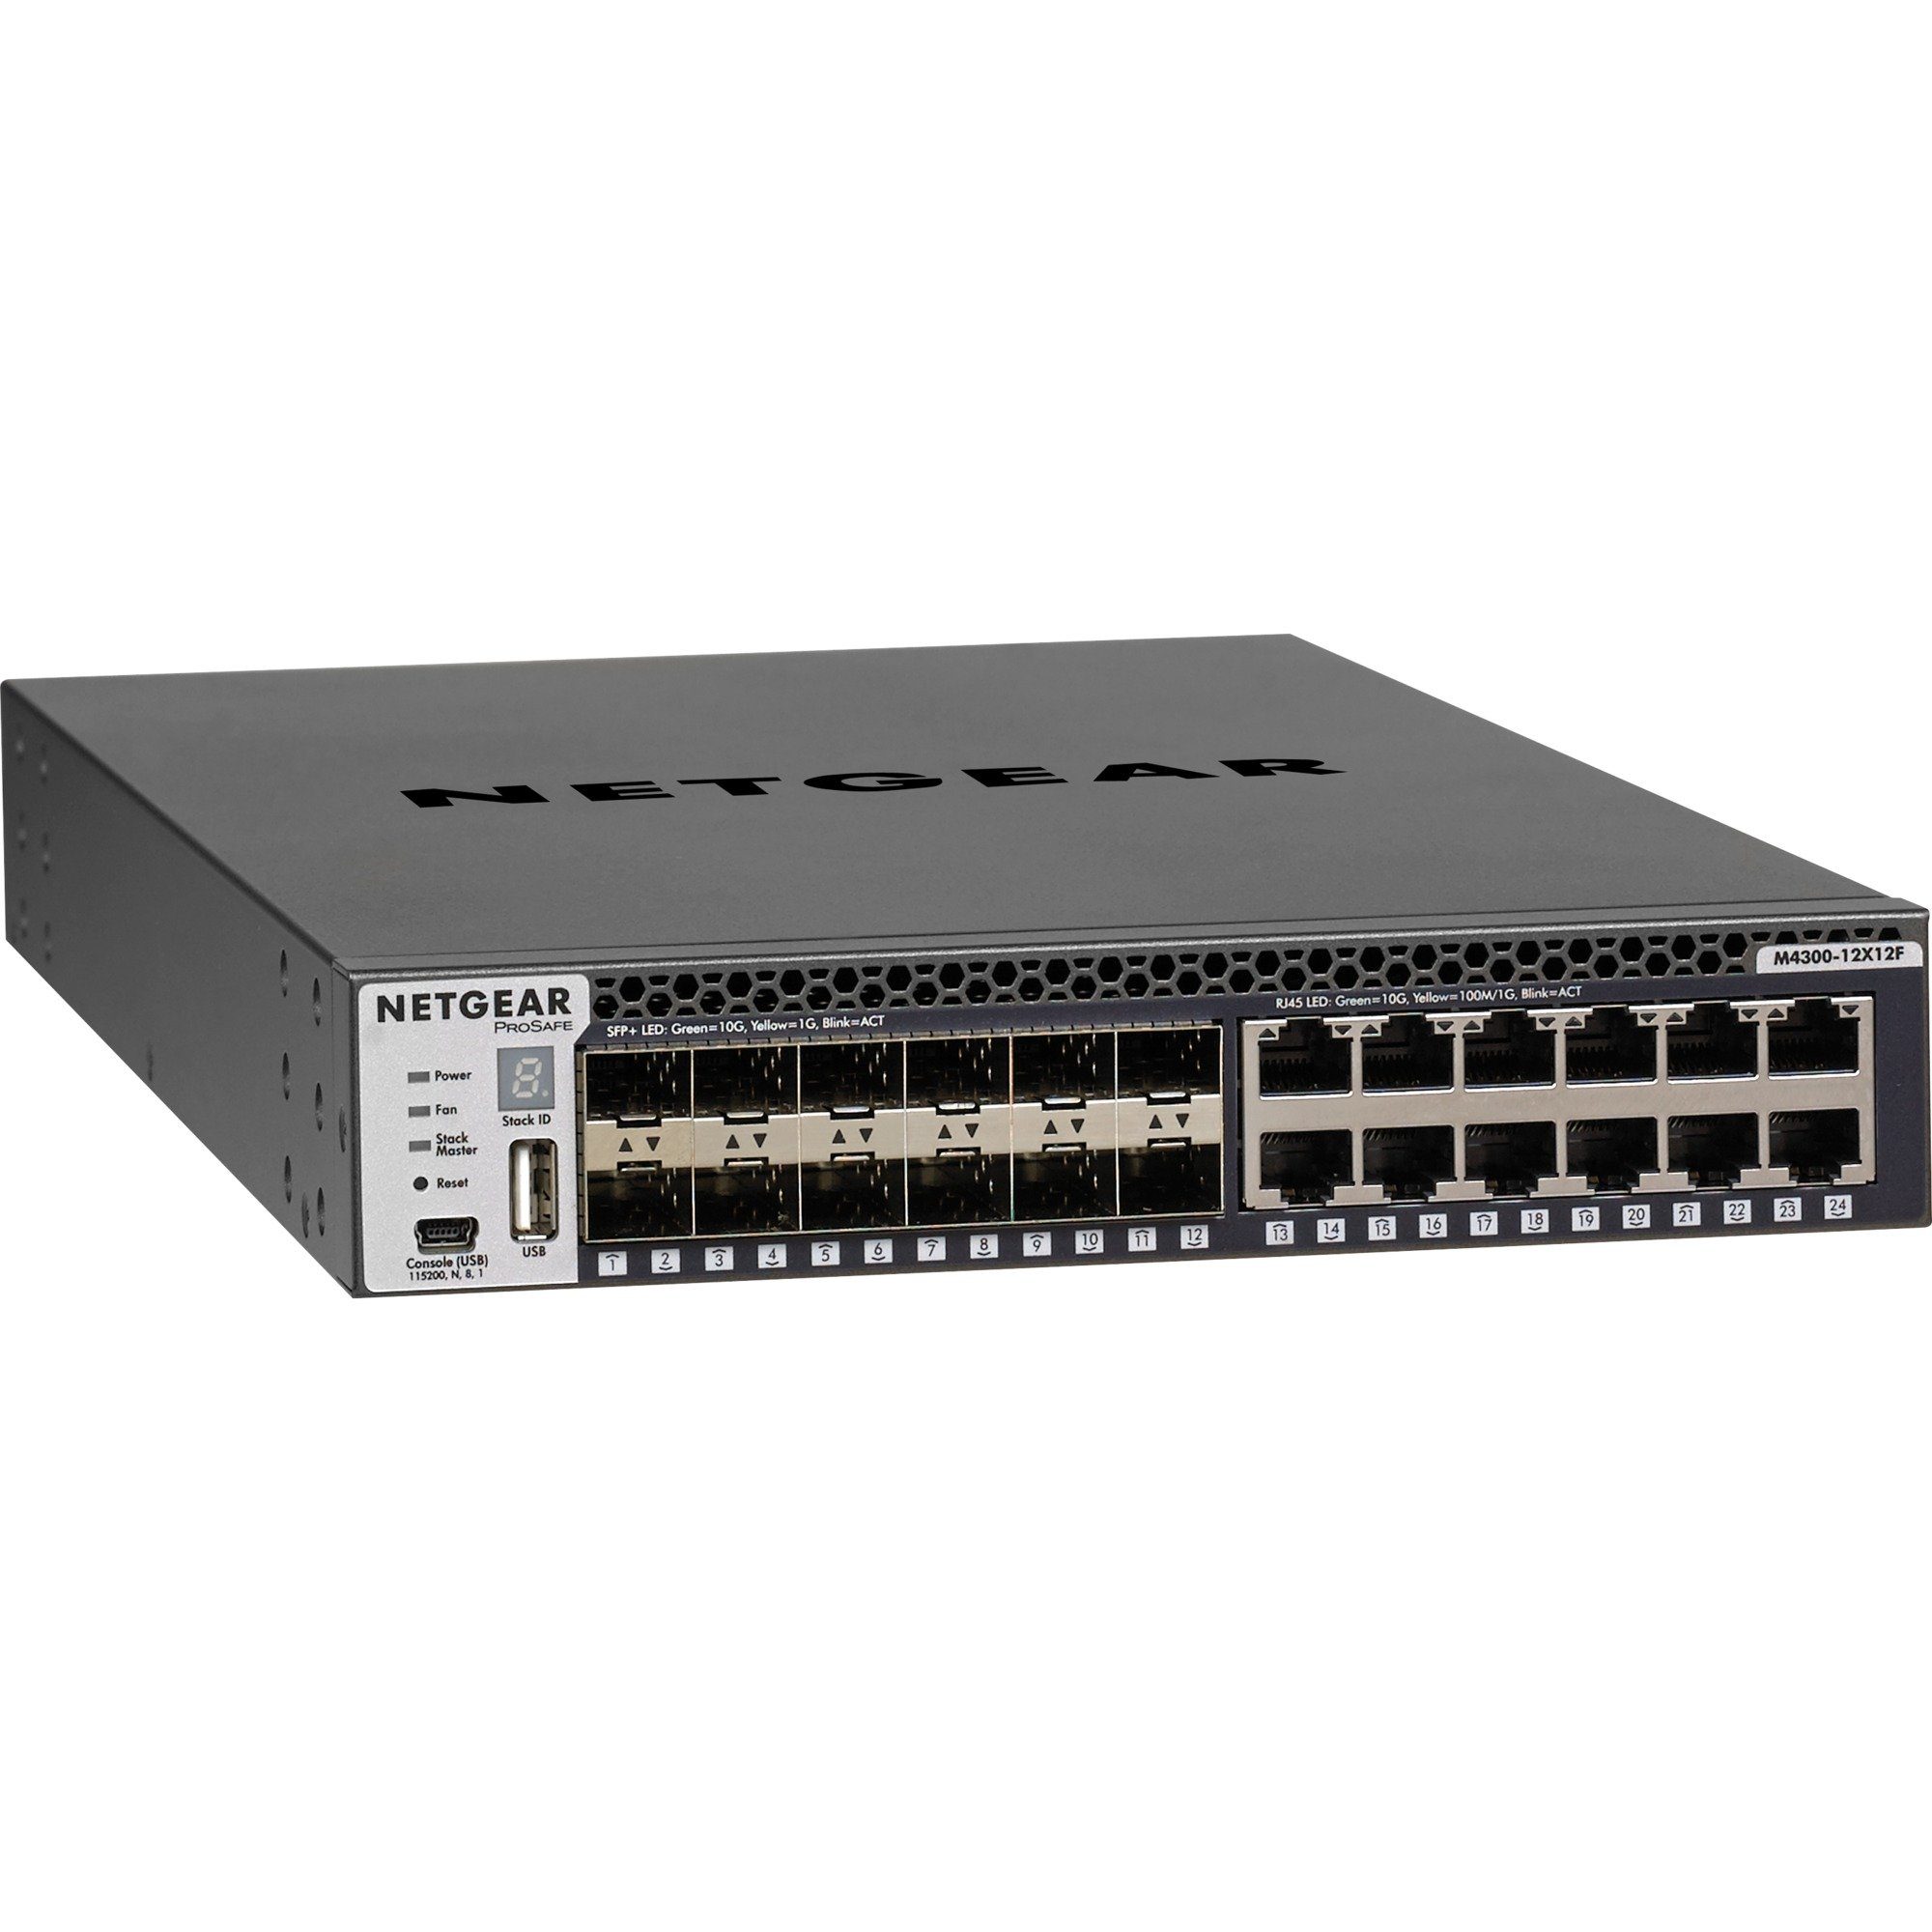 NETGEAR Netgear M4300-12X12F XG/XG/MAN/24, Switch Netzwerk-Switch